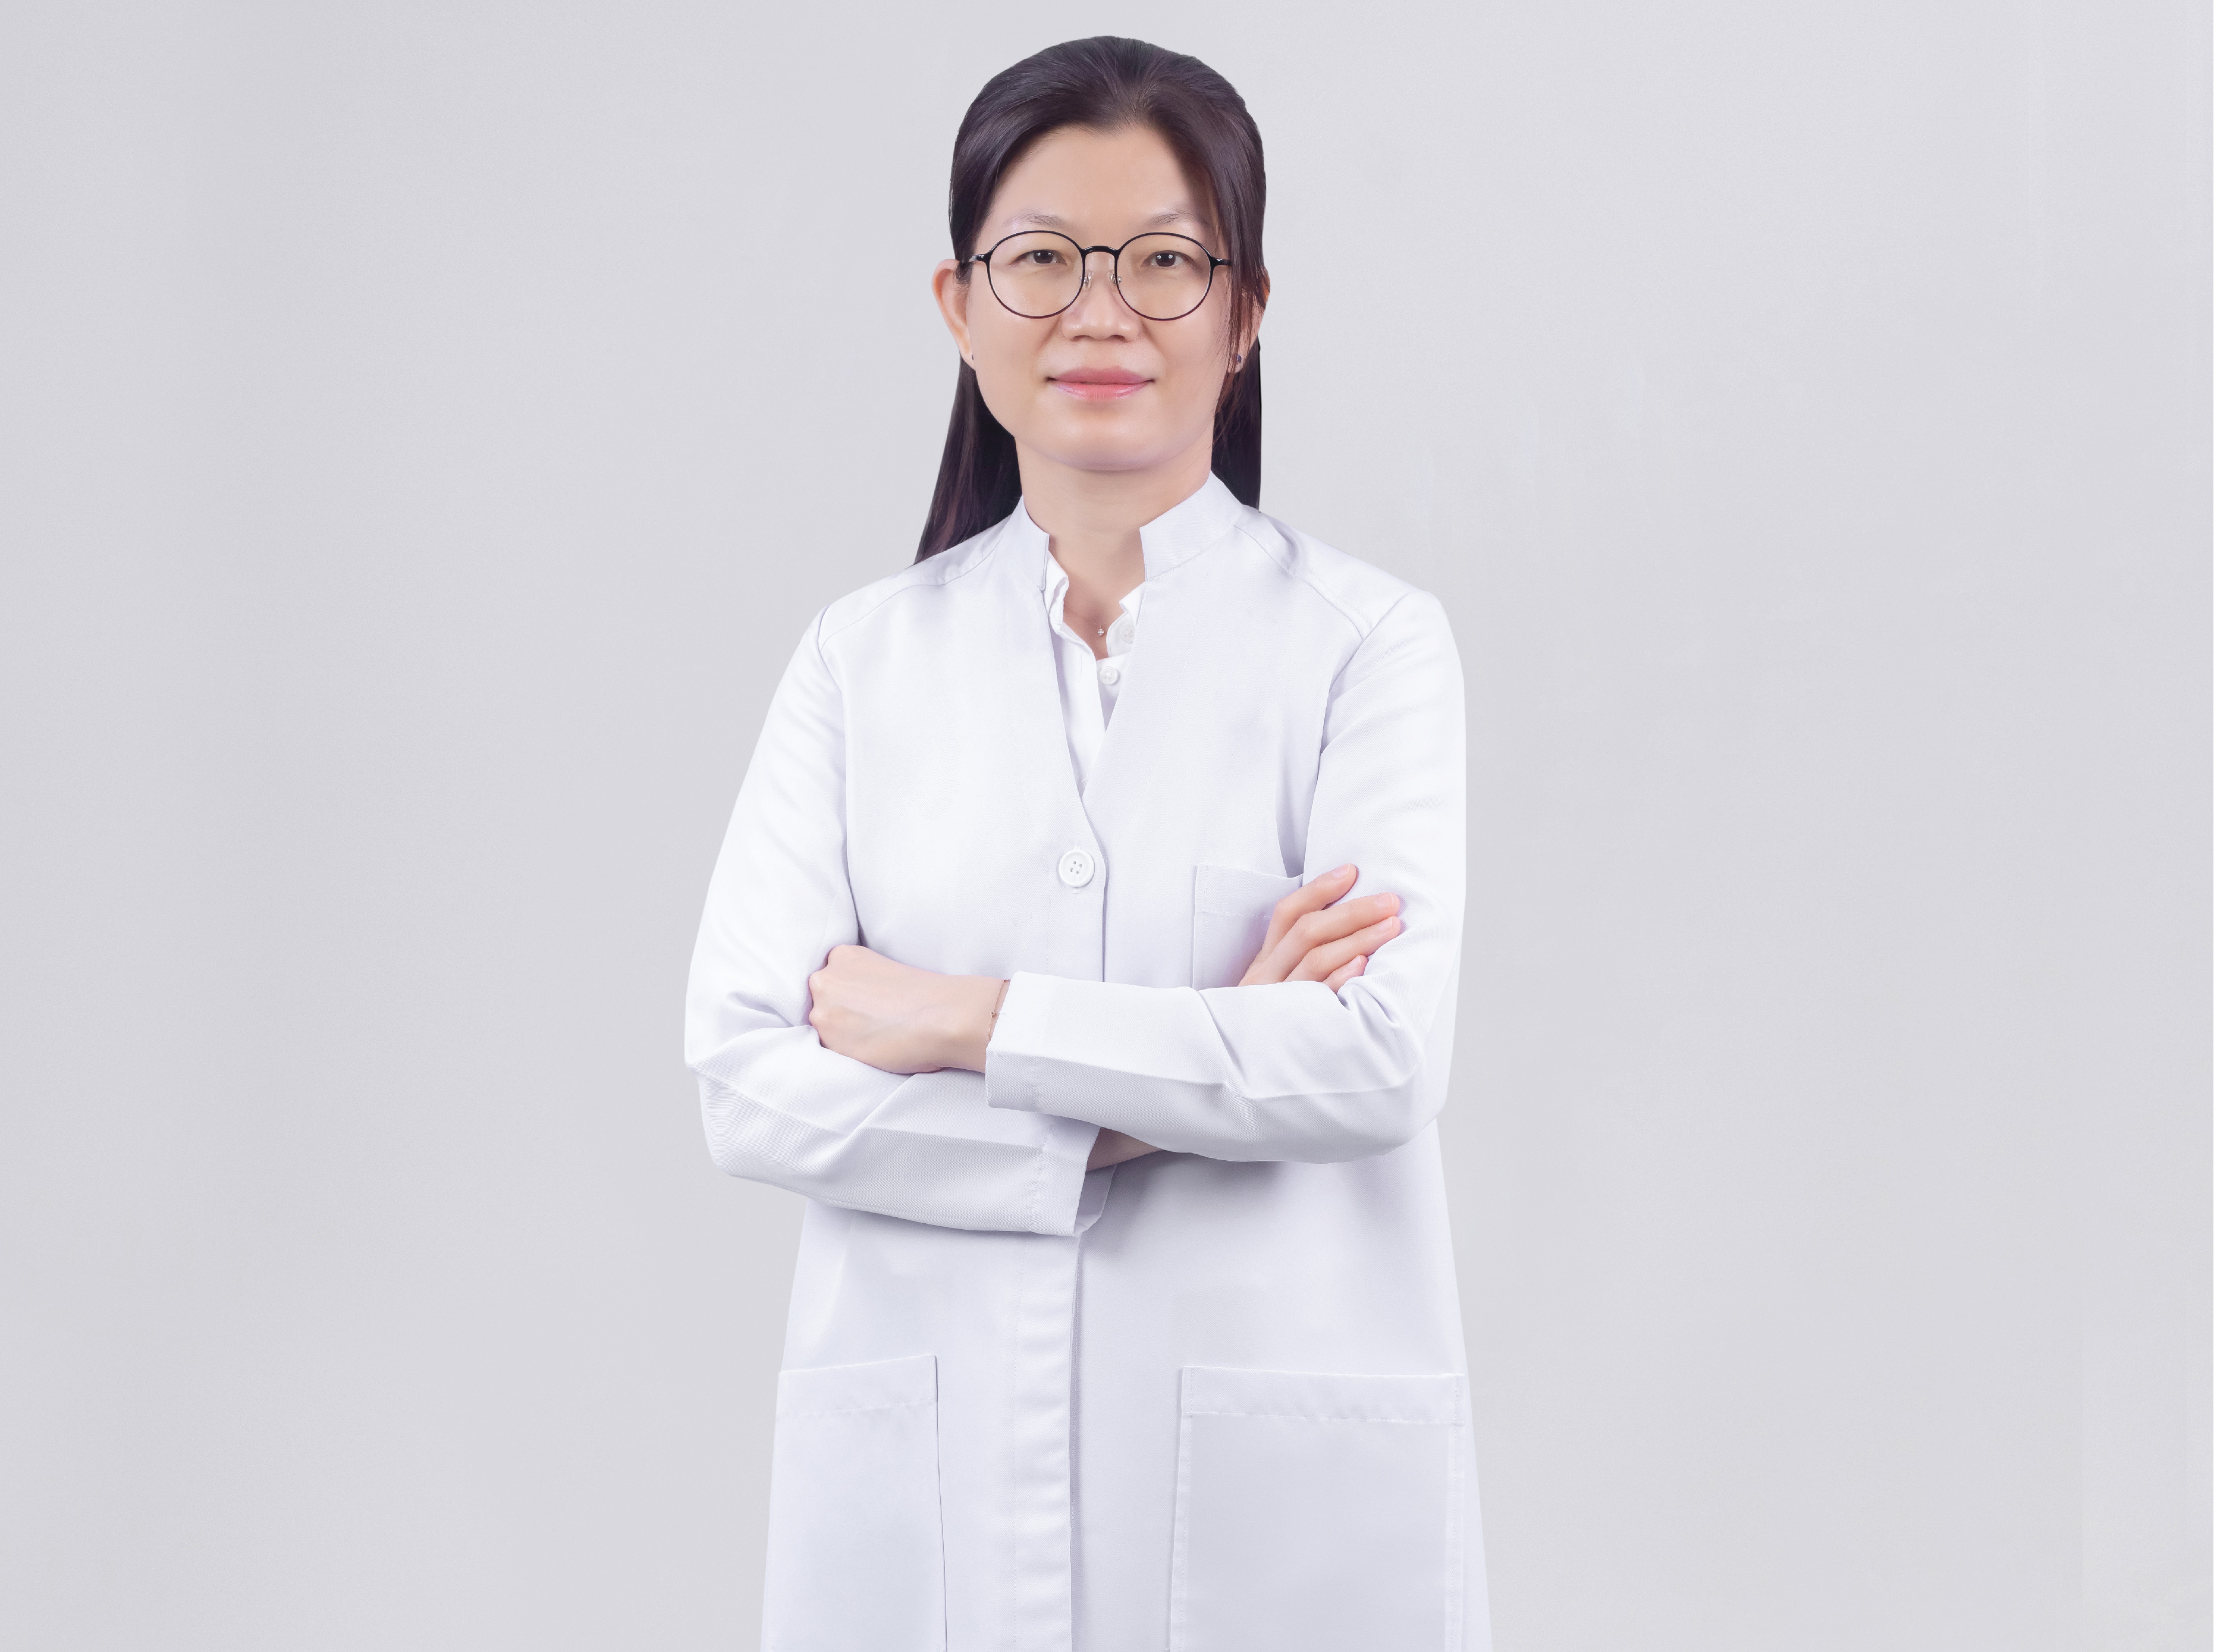 Dr. Huy Sok